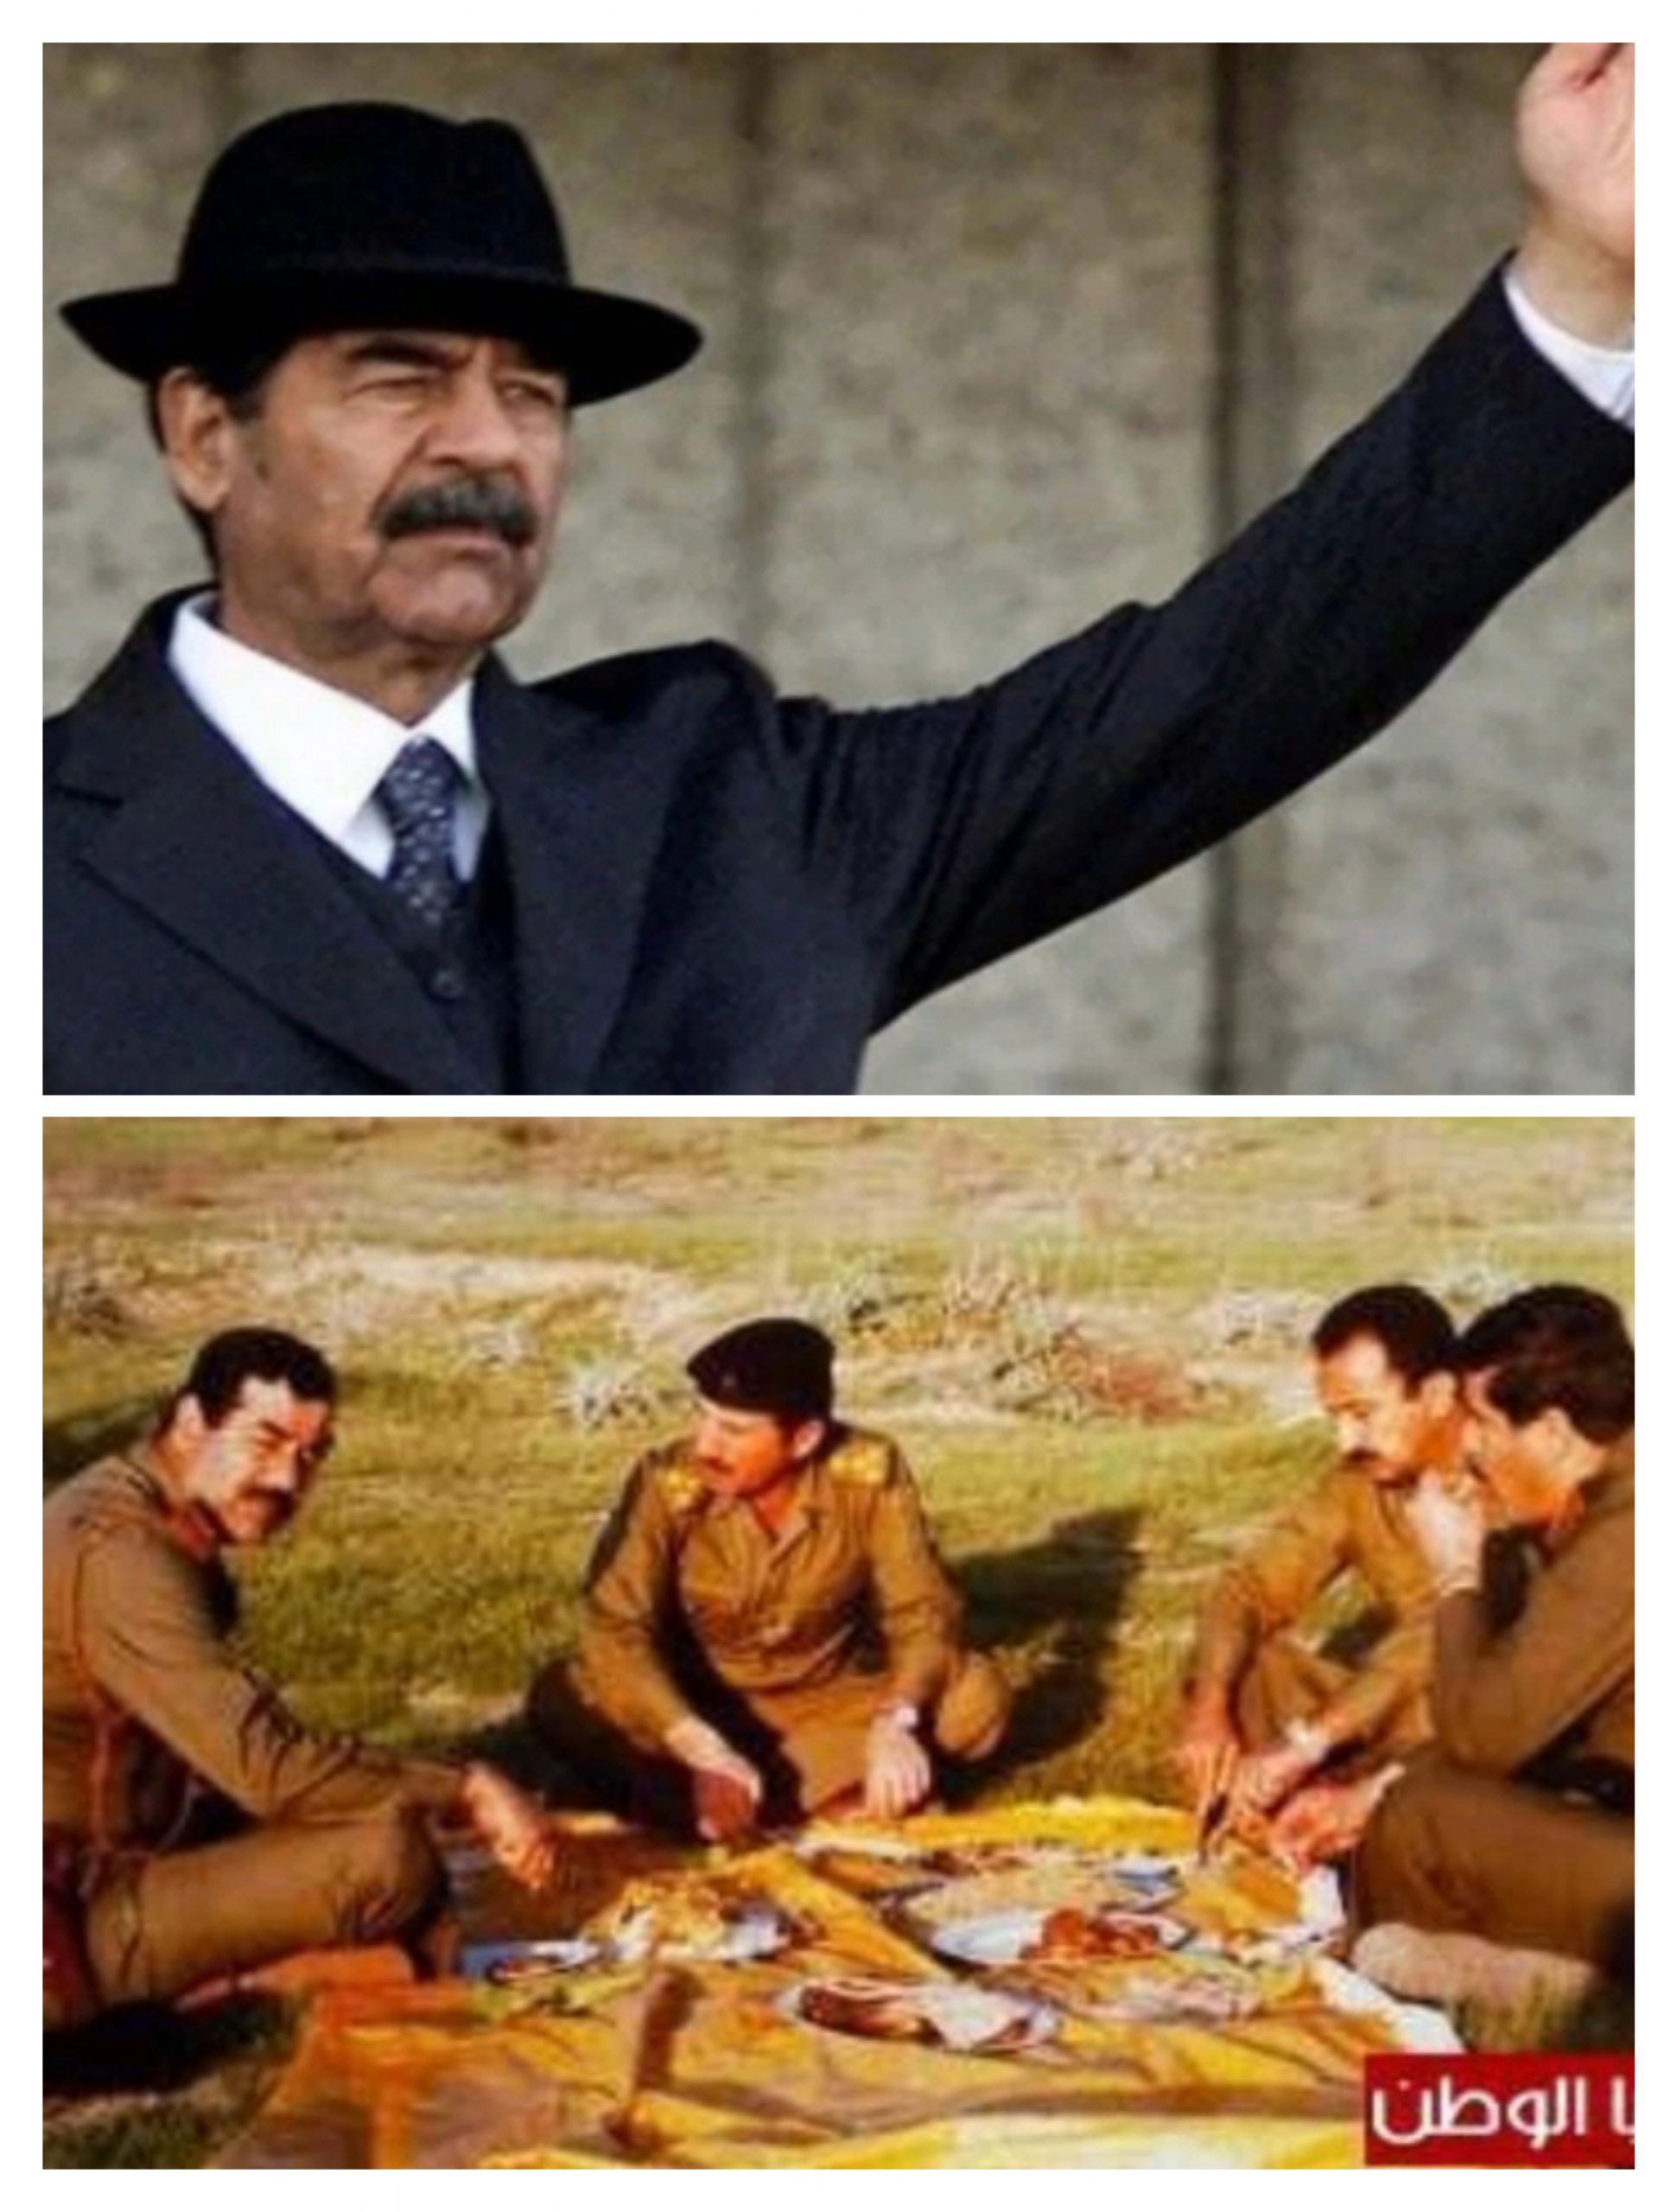 The story of Saddam Hussein.